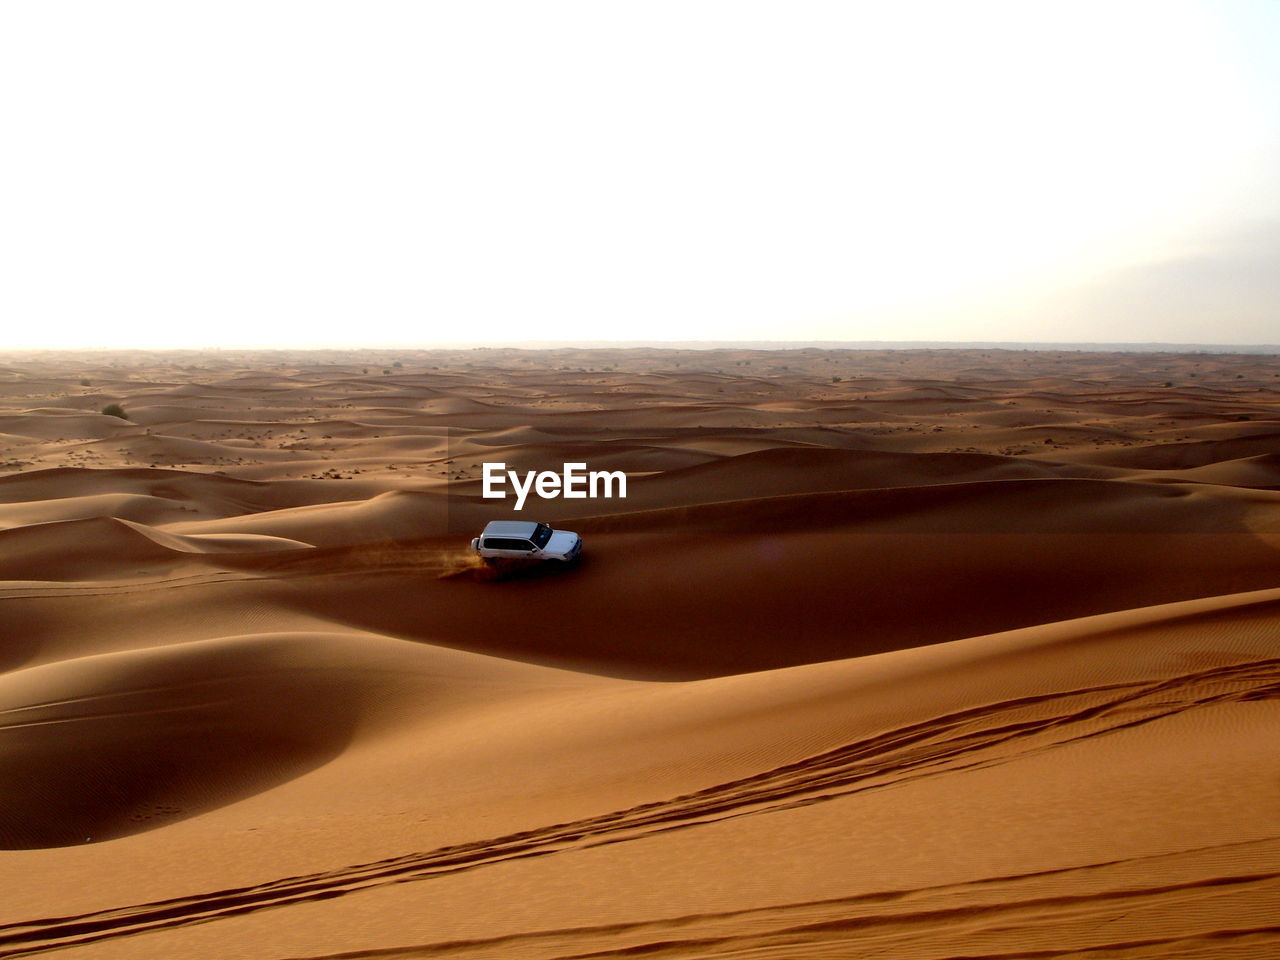 Off road vehicle in desert